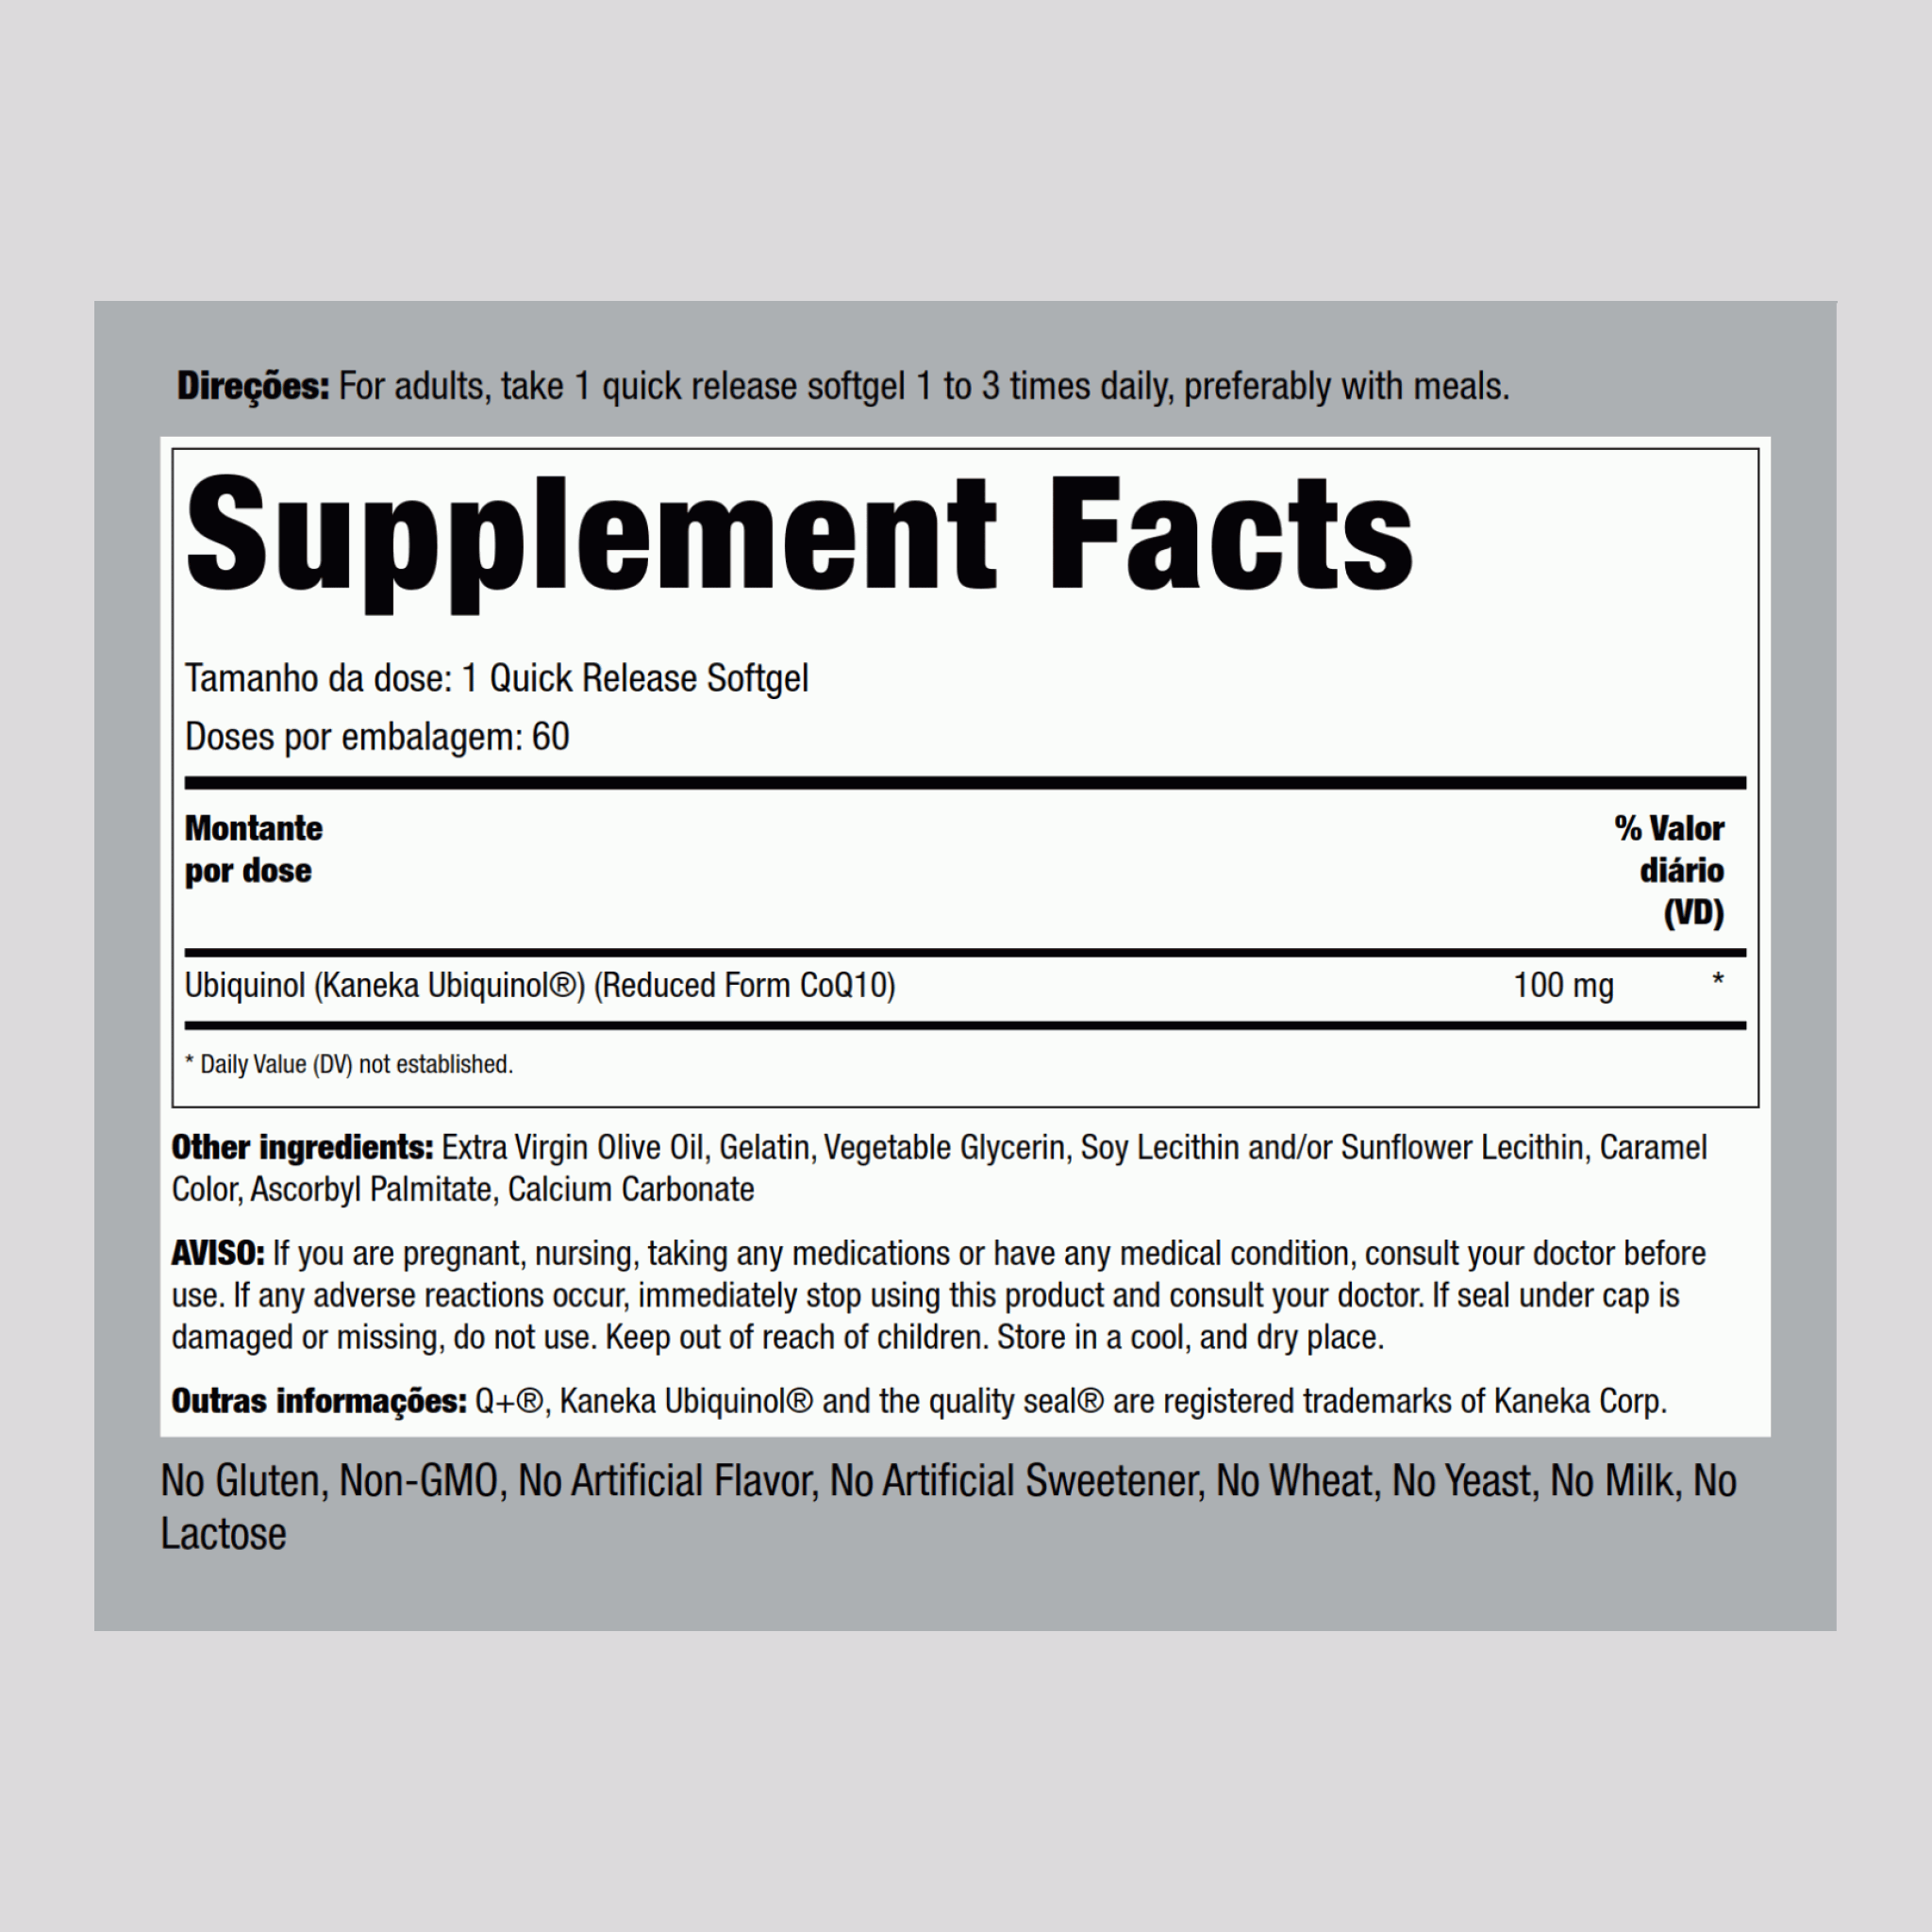 Ubiquinol 100 mg 120 Gels de Rápida Absorção     